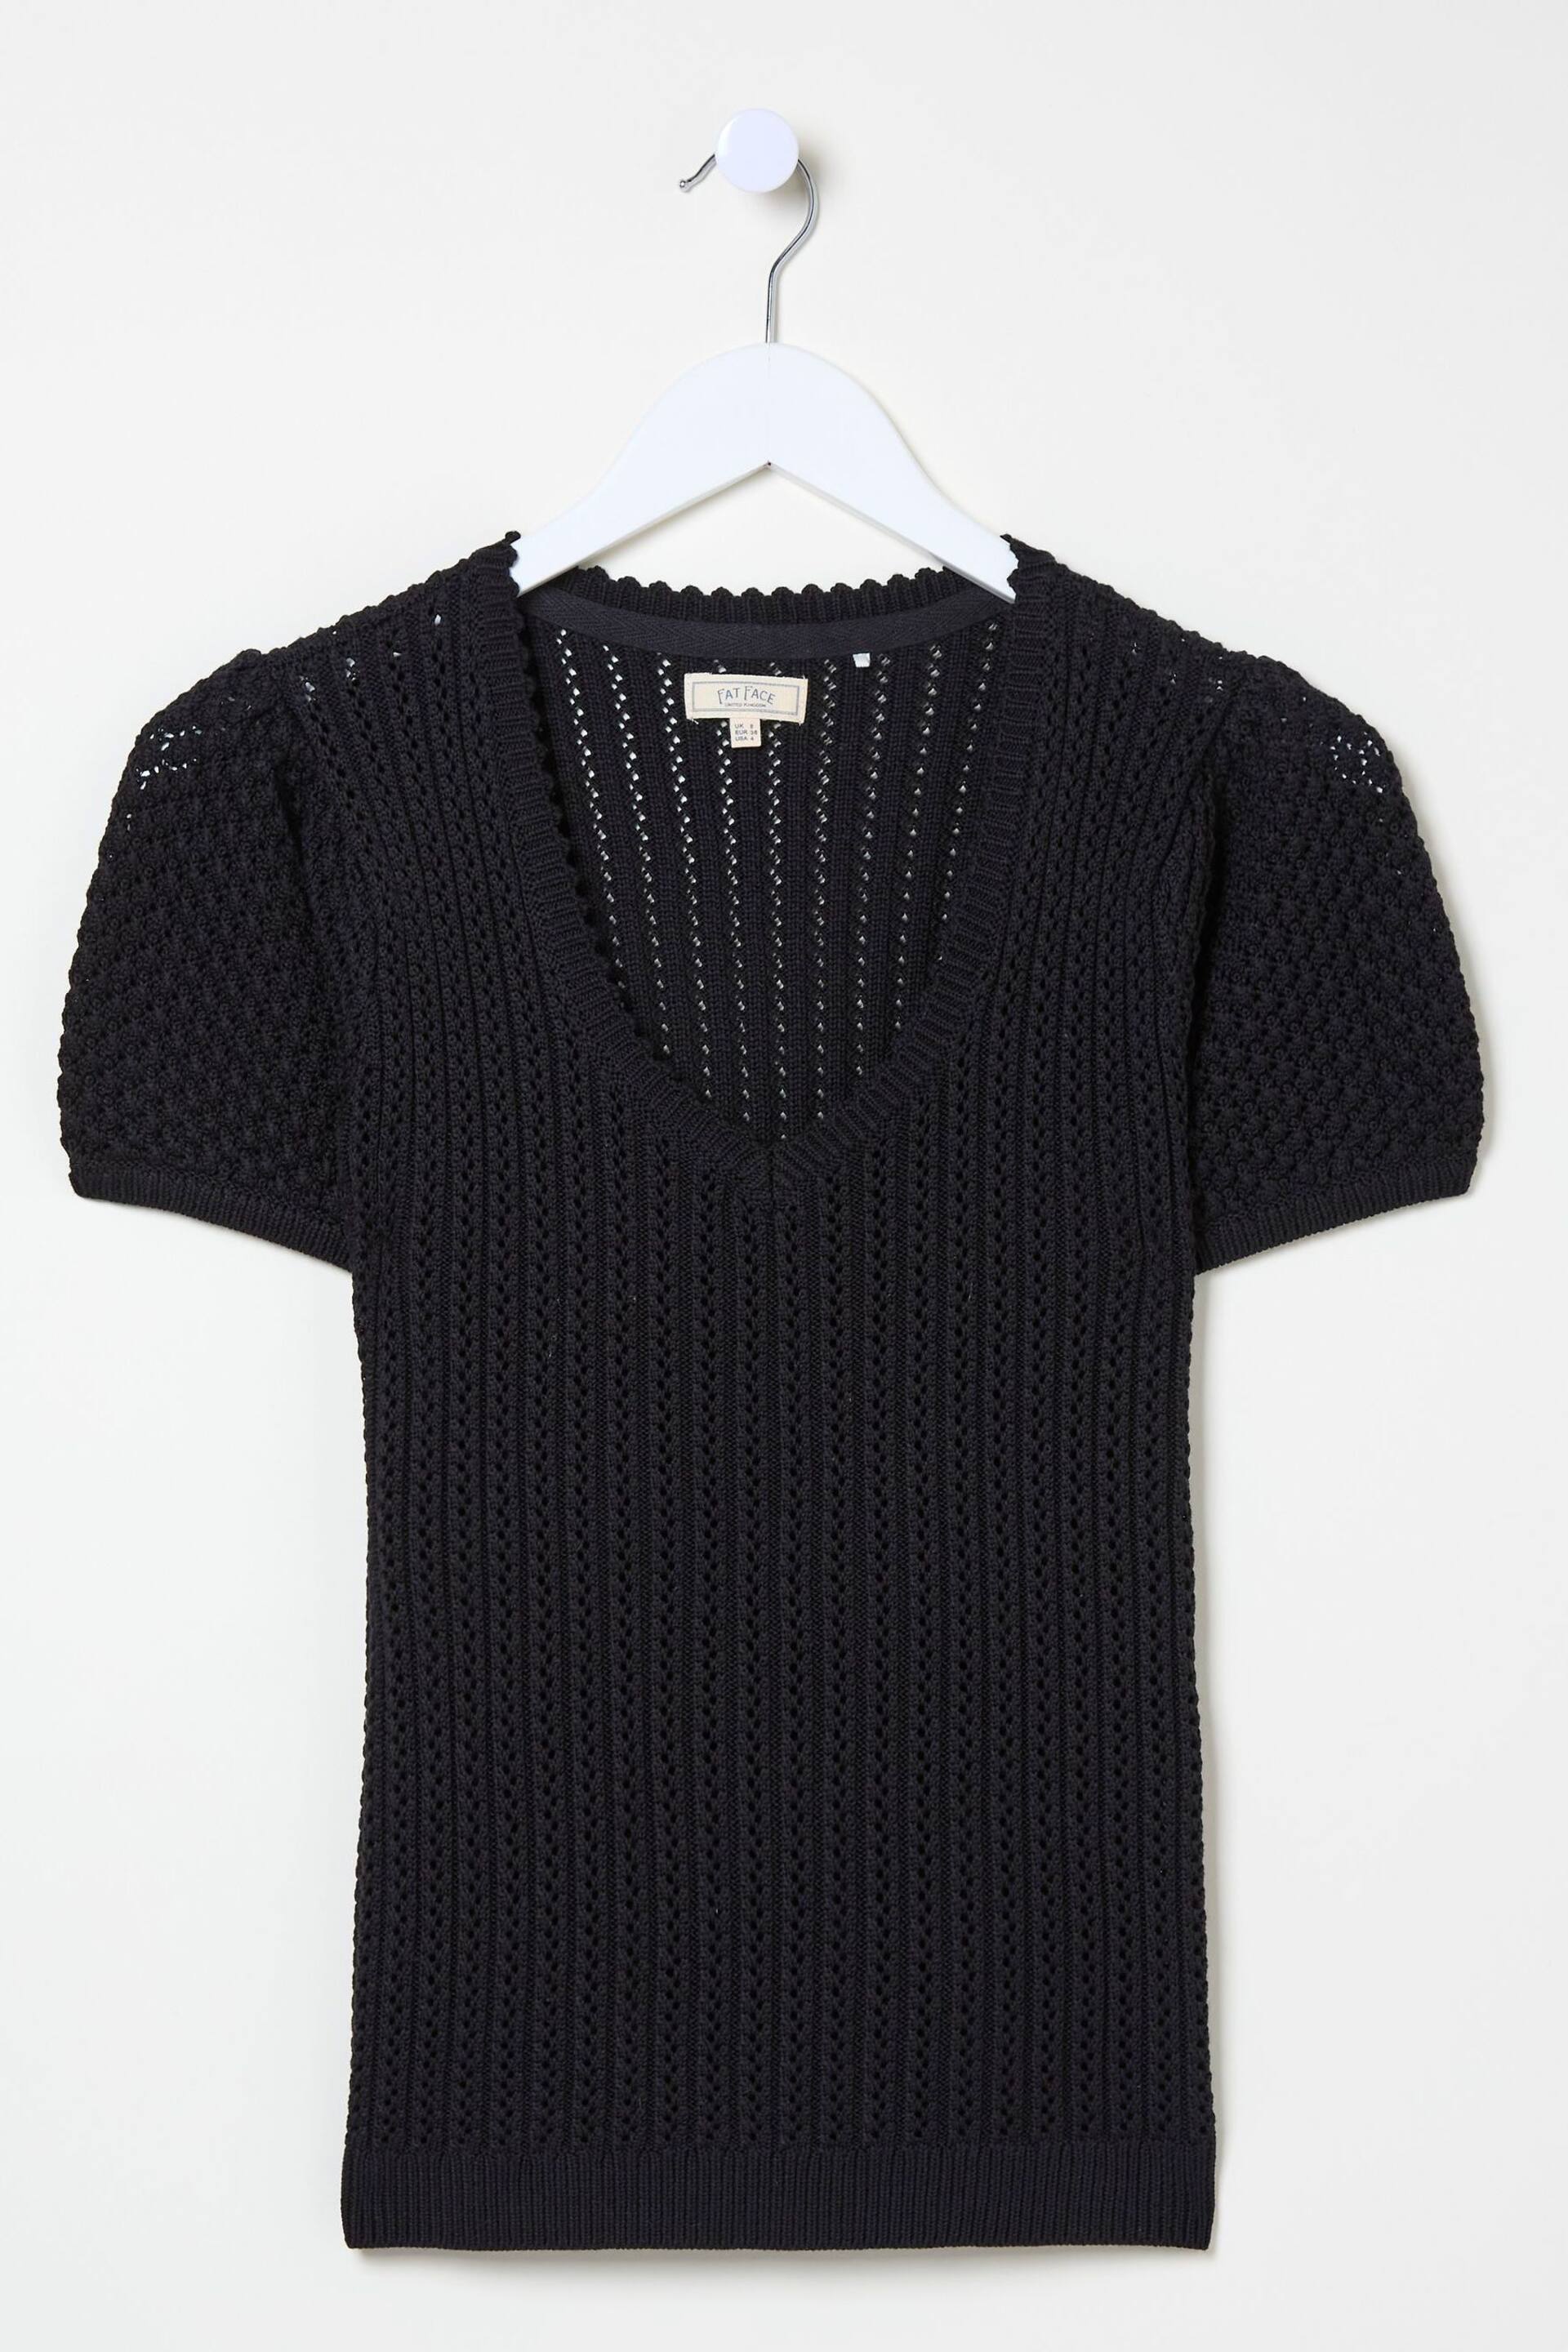 FatFace Black Ava Stitch Knit T-Shirt - Image 5 of 5